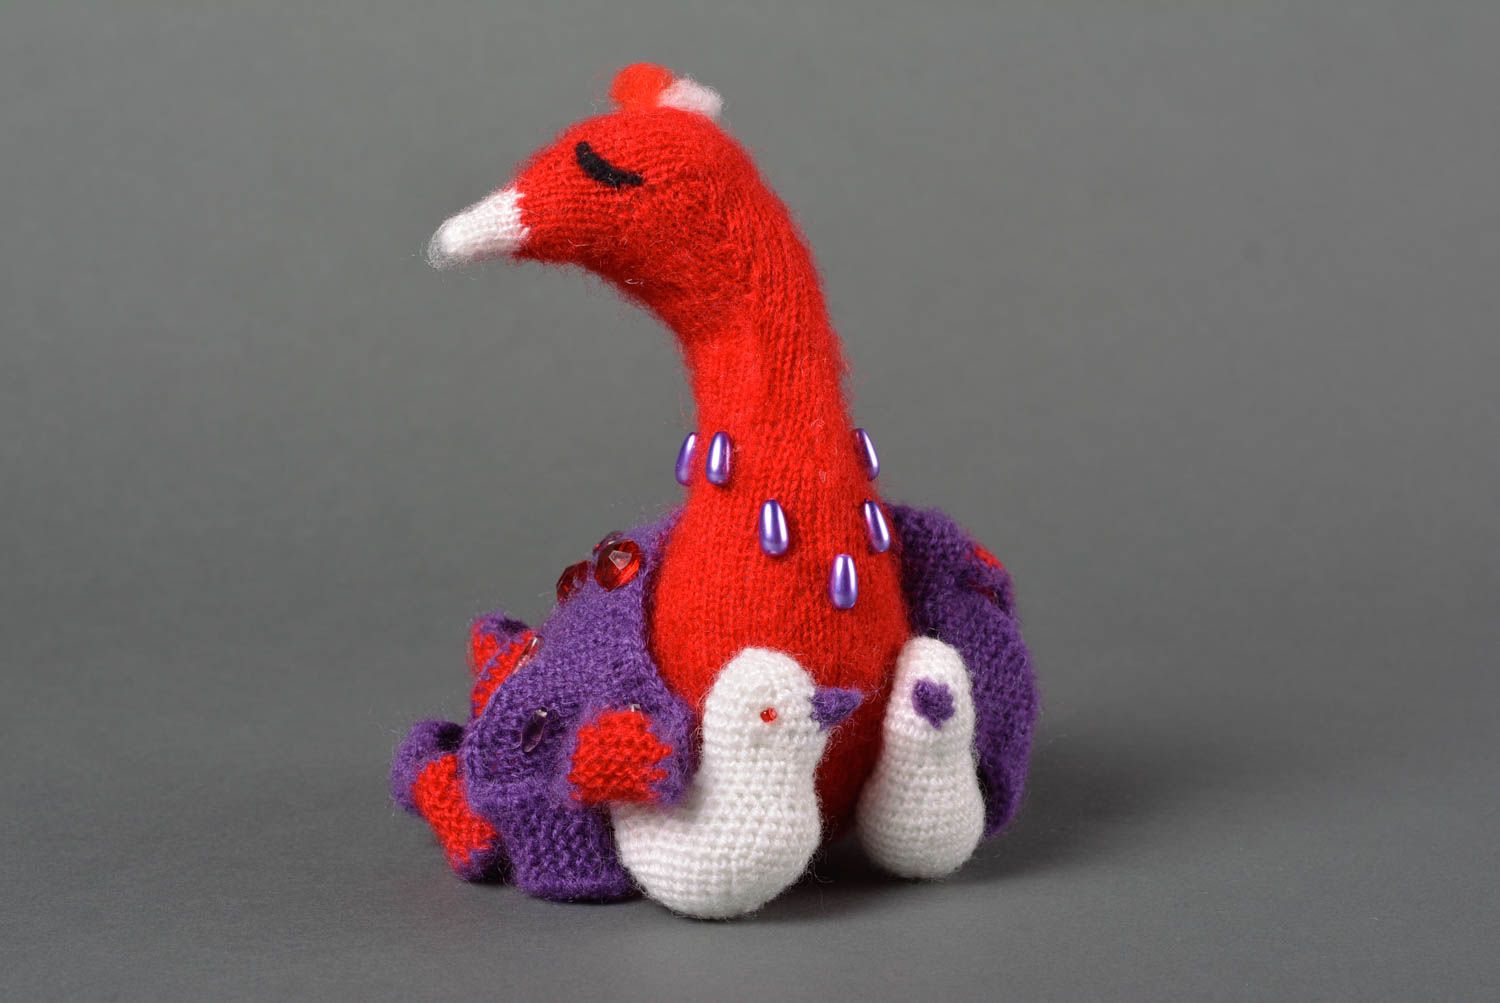 Handmade knitted bird toy stuffed toy nursery decor present for children photo 1